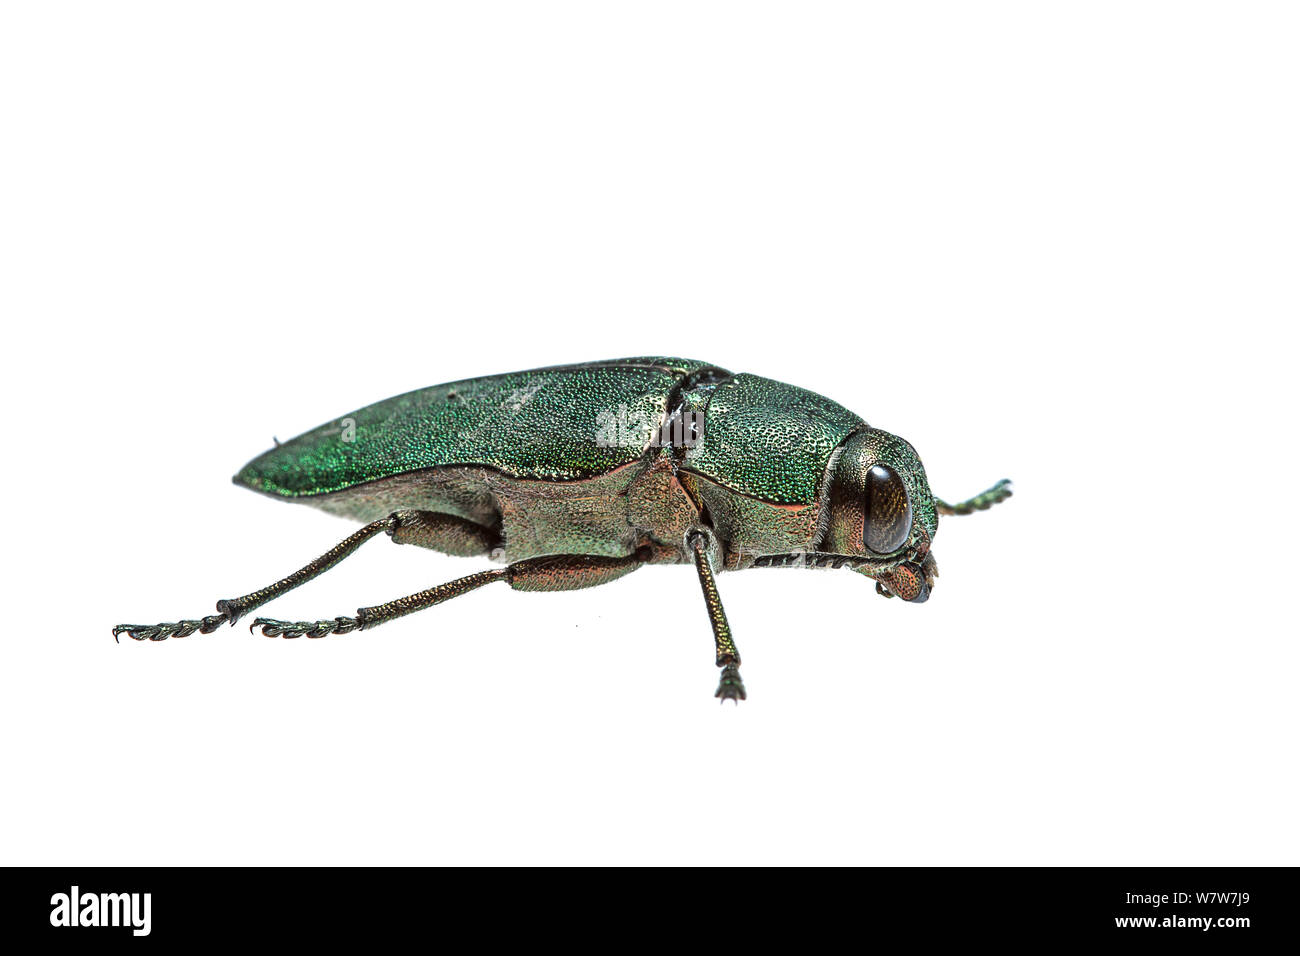 Jewel beetle (Buprestidae) Crete, Greece. Meetyourneighbours.net project. Stock Photo